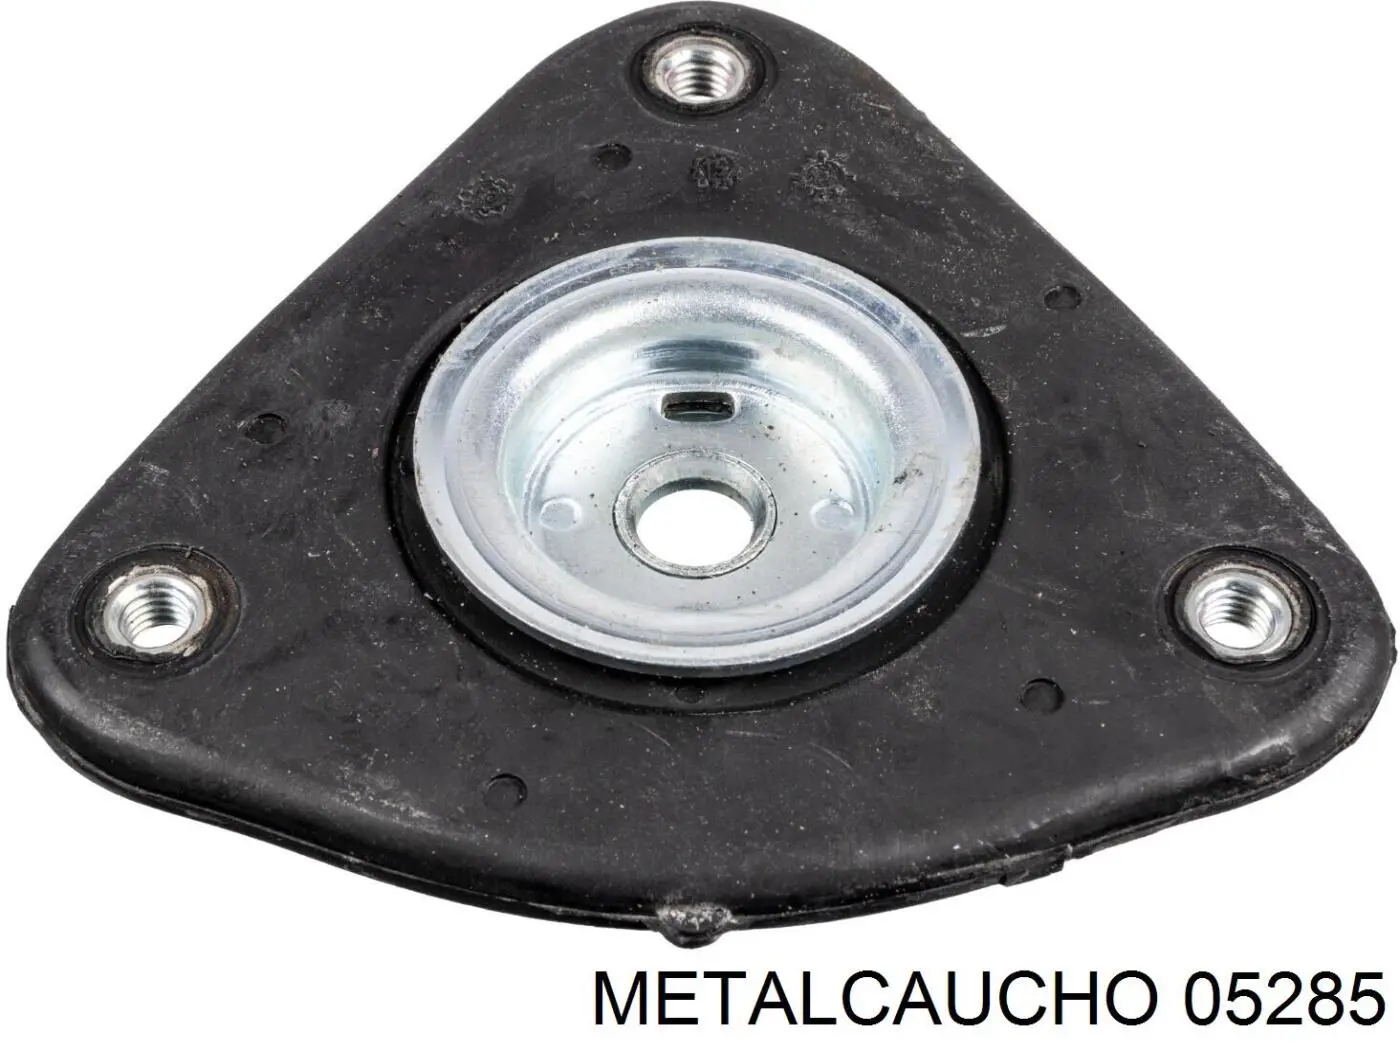 05285 Metalcaucho soporte amortiguador delantero